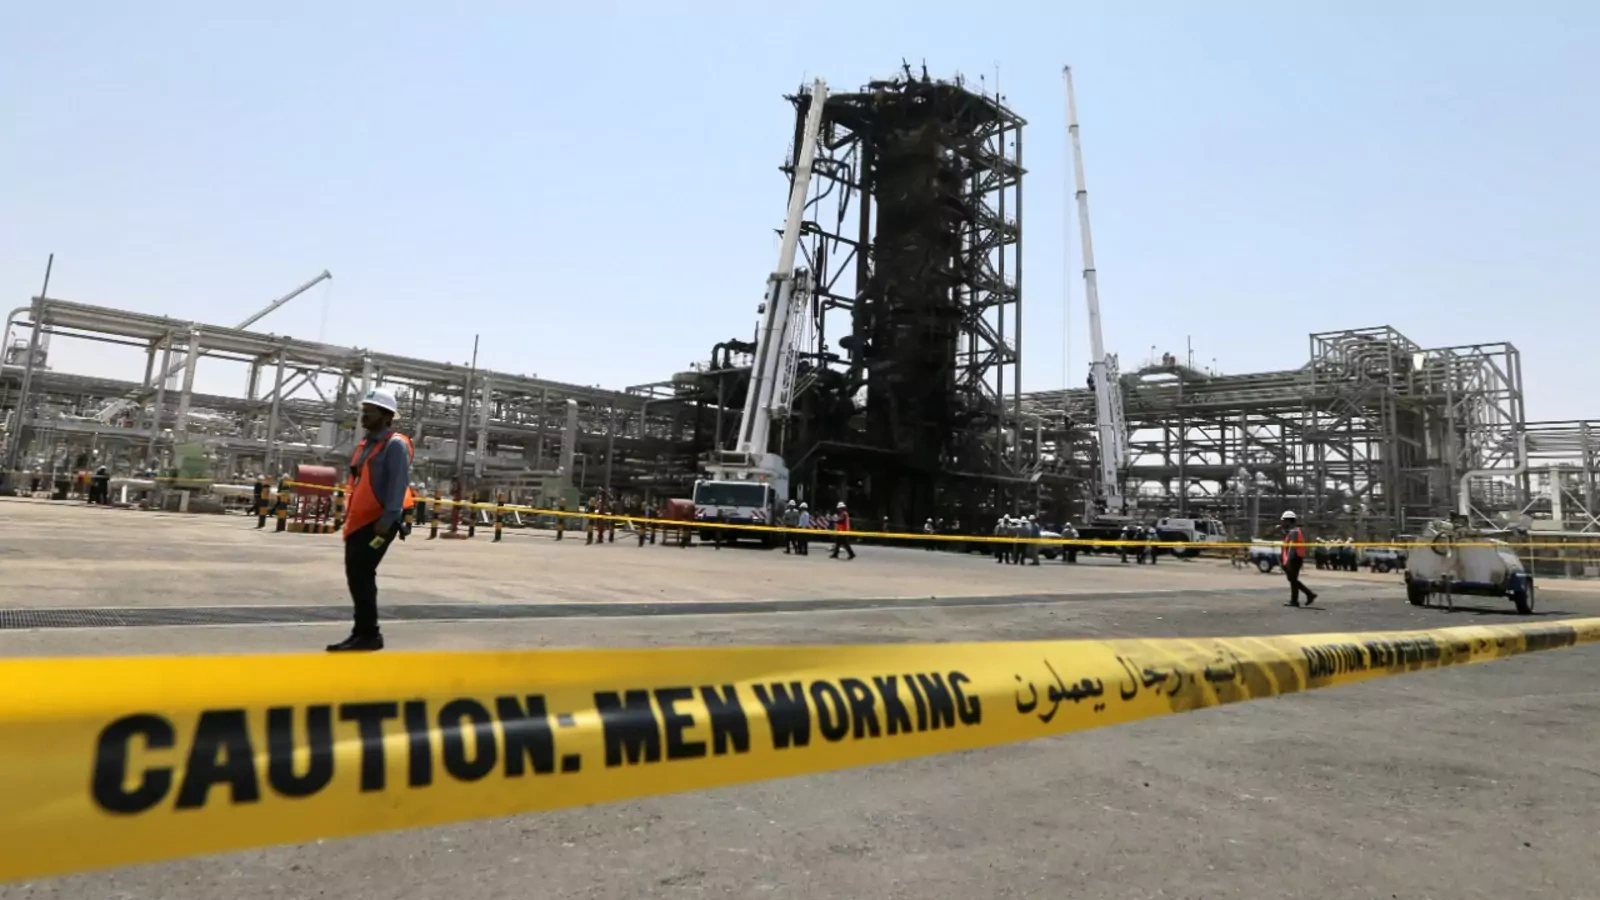 Workers at the damaged site of Saudi Aramco oil facility in Khurais, Saudi Arabia, September 20, 2019. 